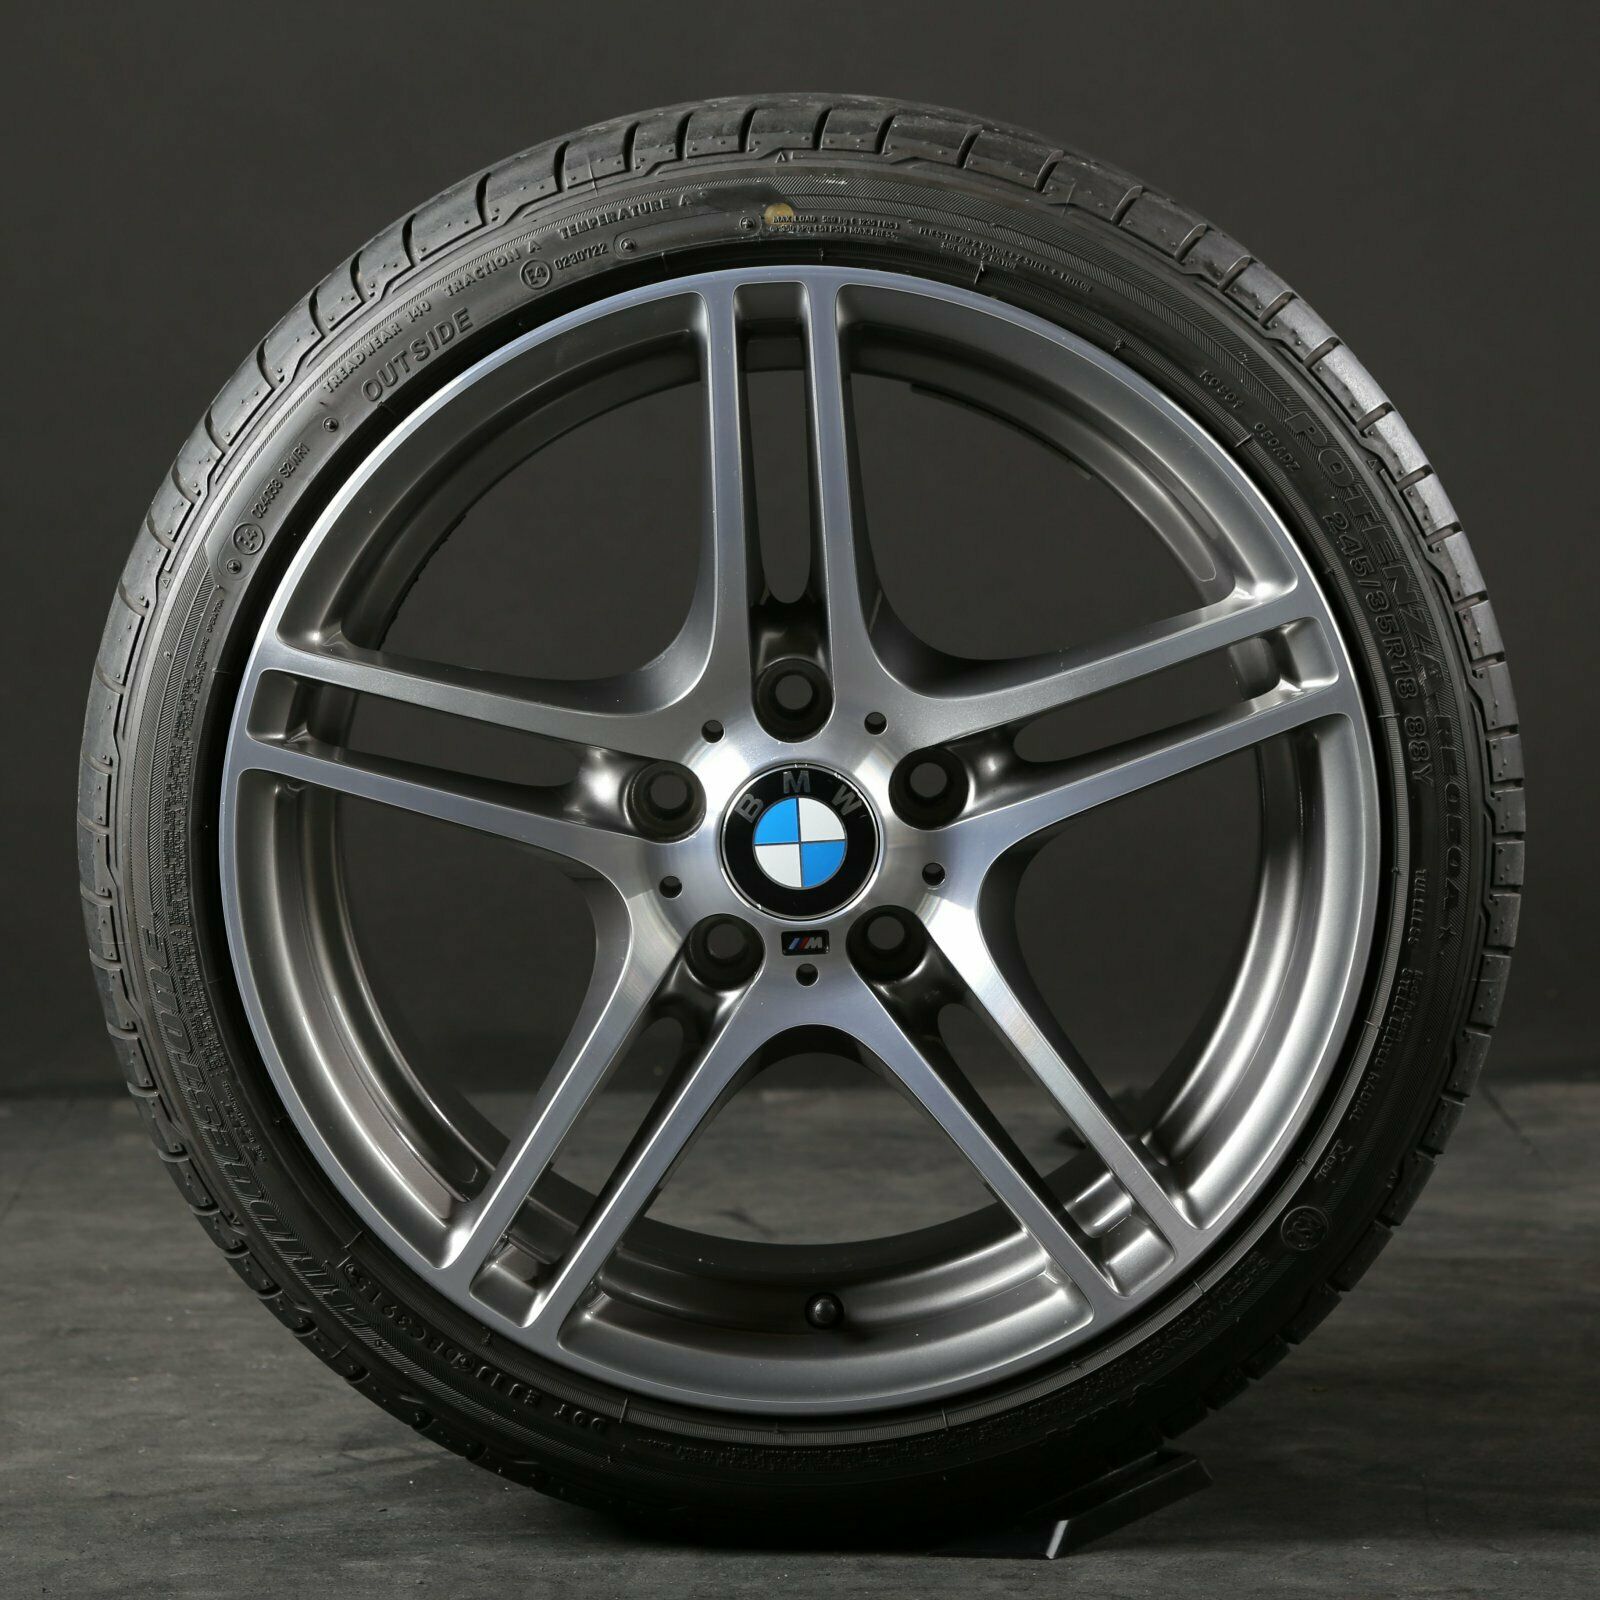 4 X Black OEM Style Wheel Bolts Fits BMW 1 Series 2004-2011 E81 E87 E88